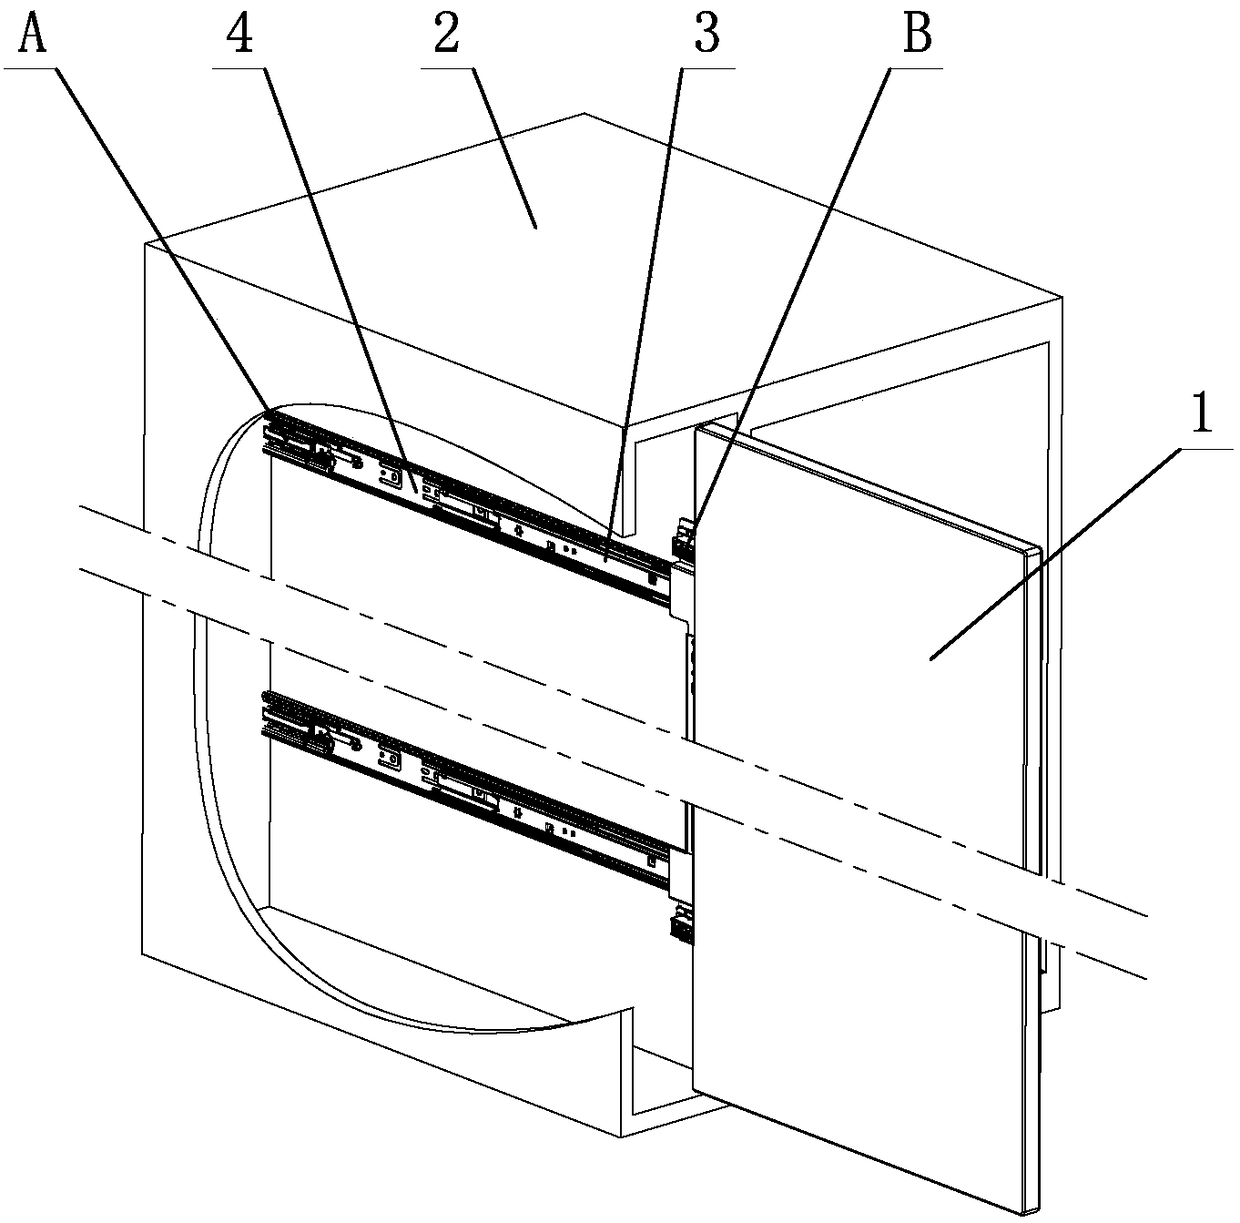 Rotary storage locking mechanism used for furniture